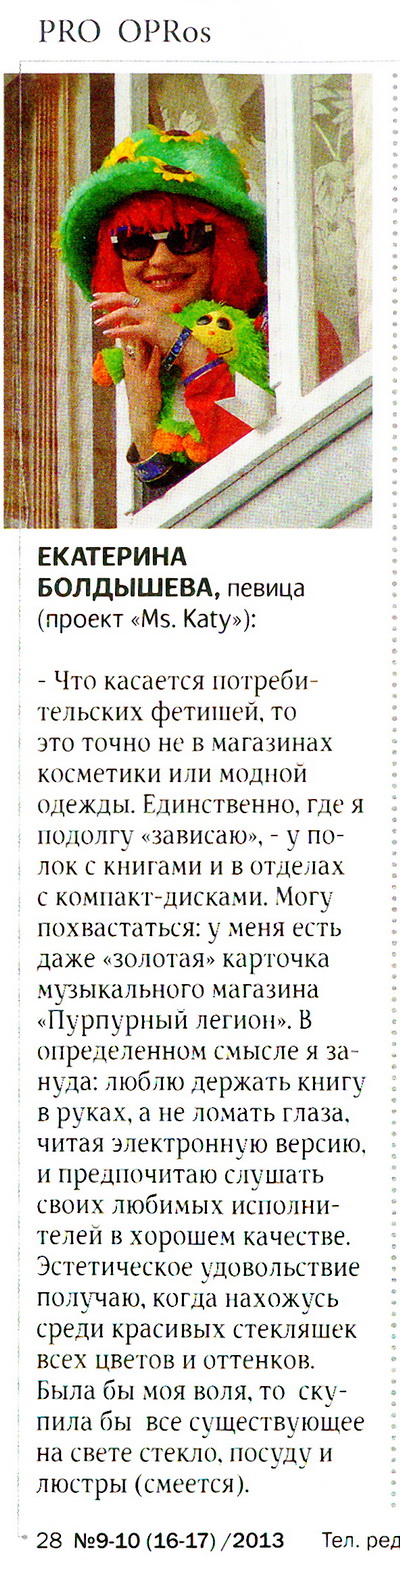 Екатерина Болдышева, Ms. Katy - PRO OPRos #9-10,2013